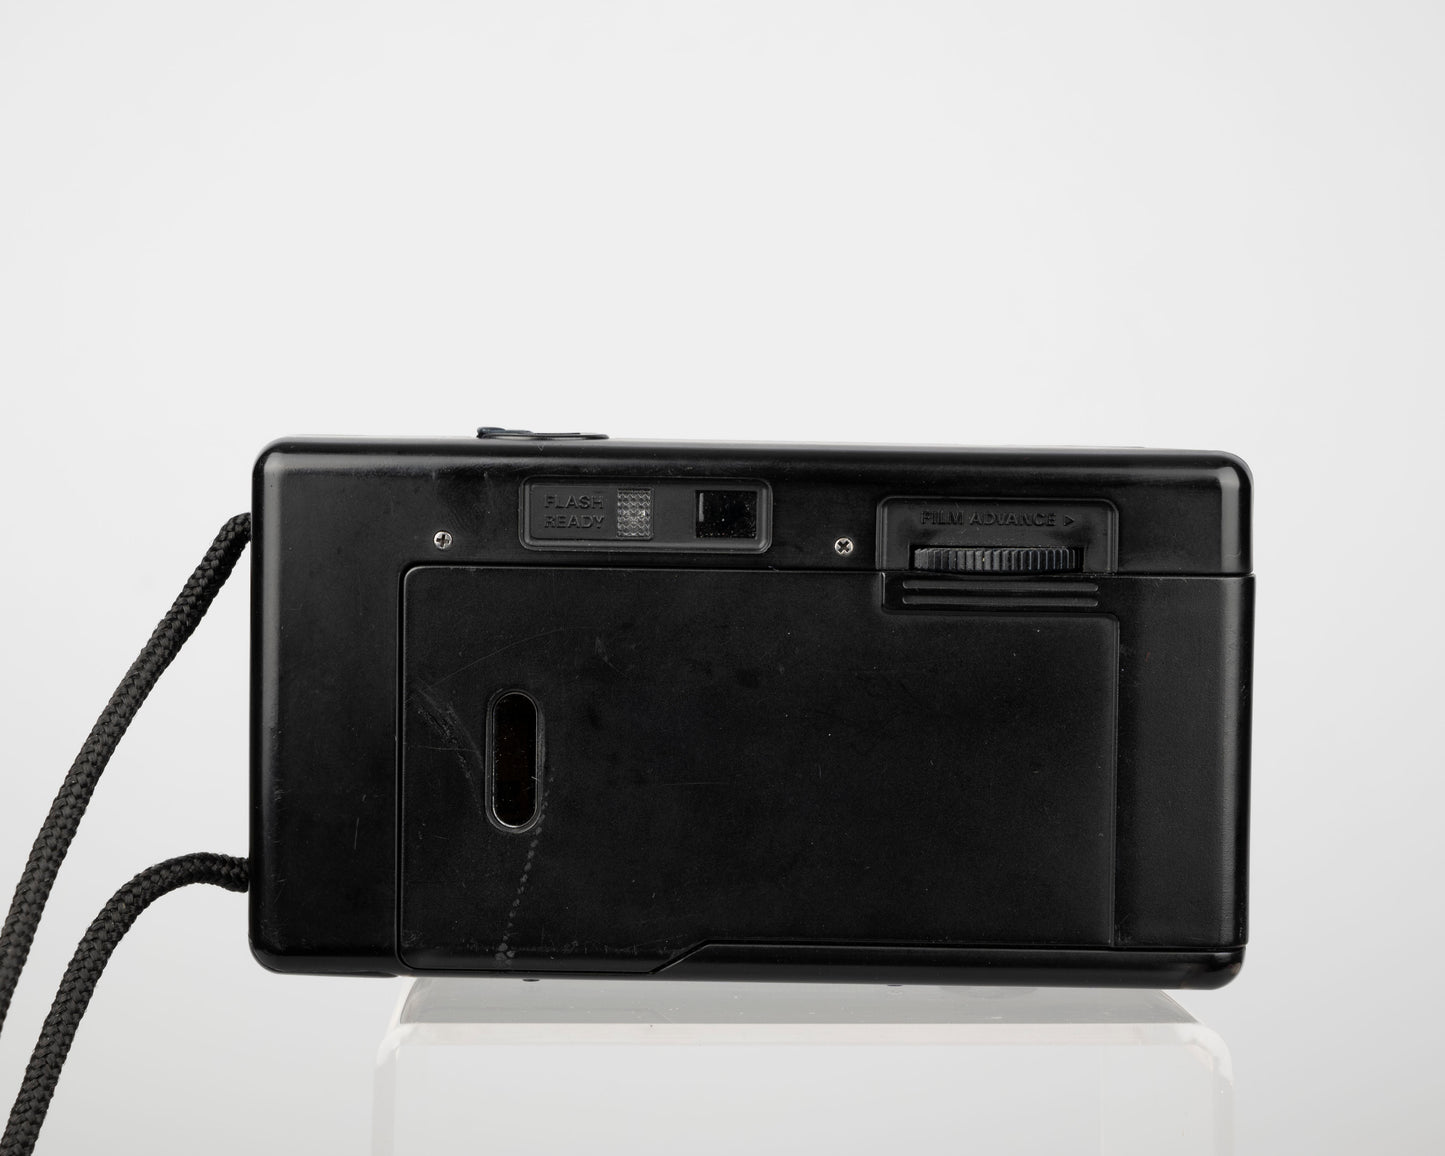 Kodak VR35 K400 35mm camera w/ original manual